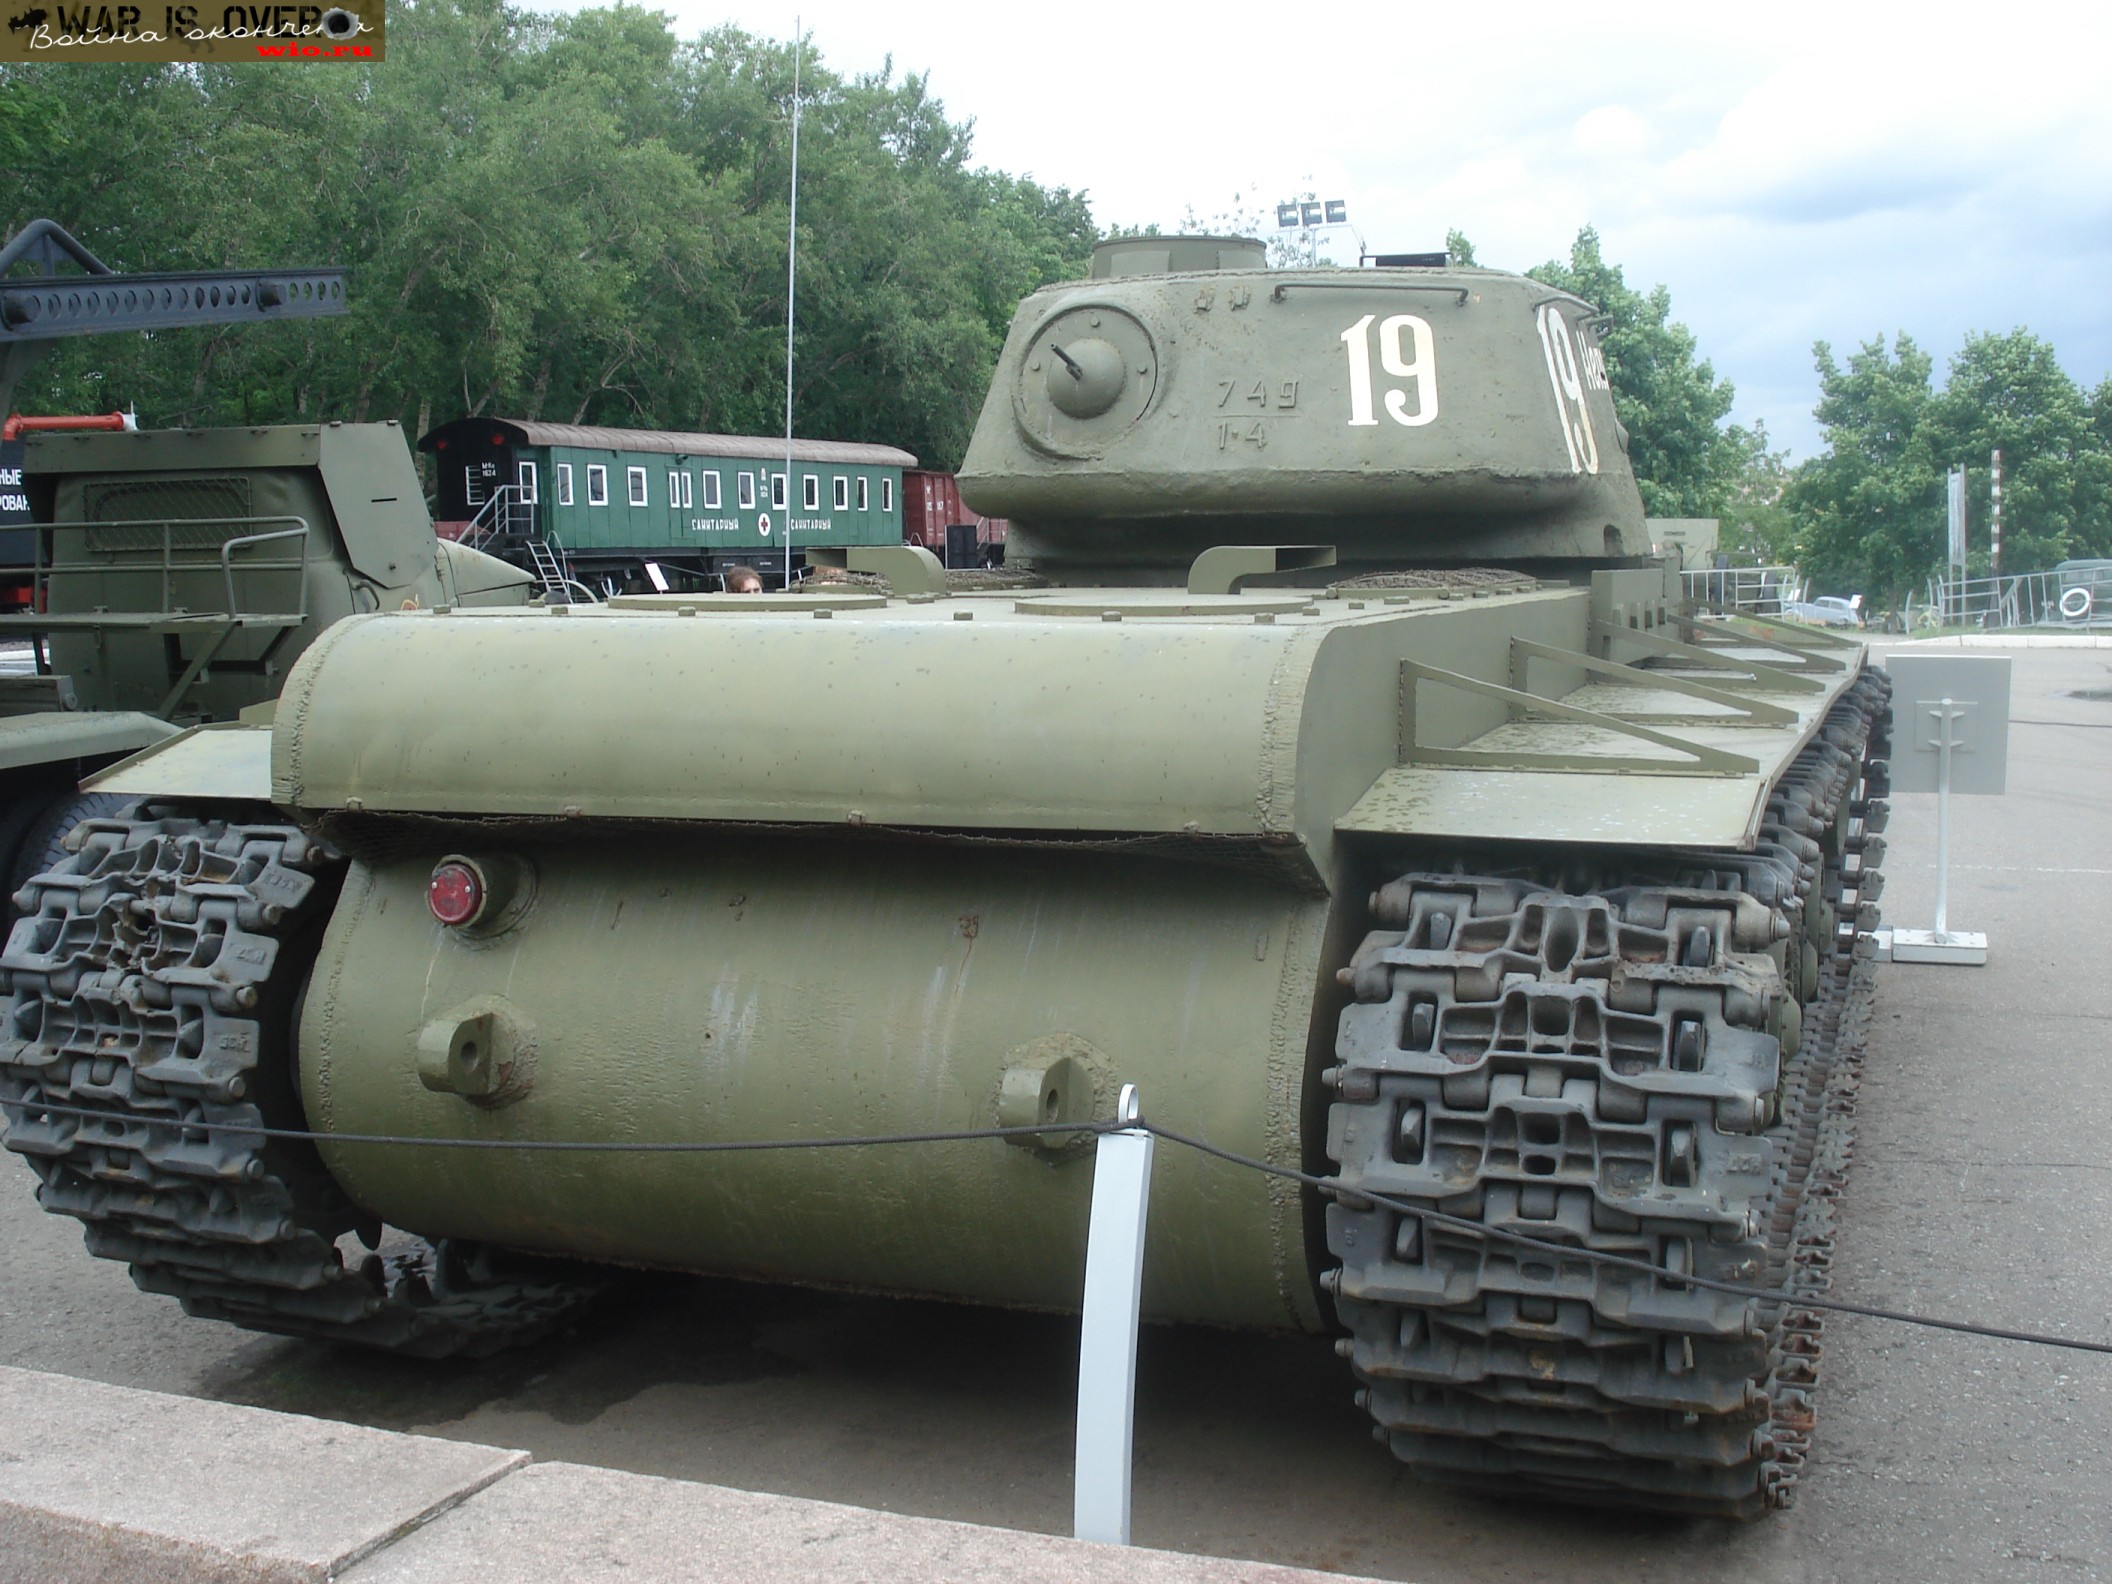 image ww2 USSR heavy tank KV-1S rear. Second world war armored fighting vehicle